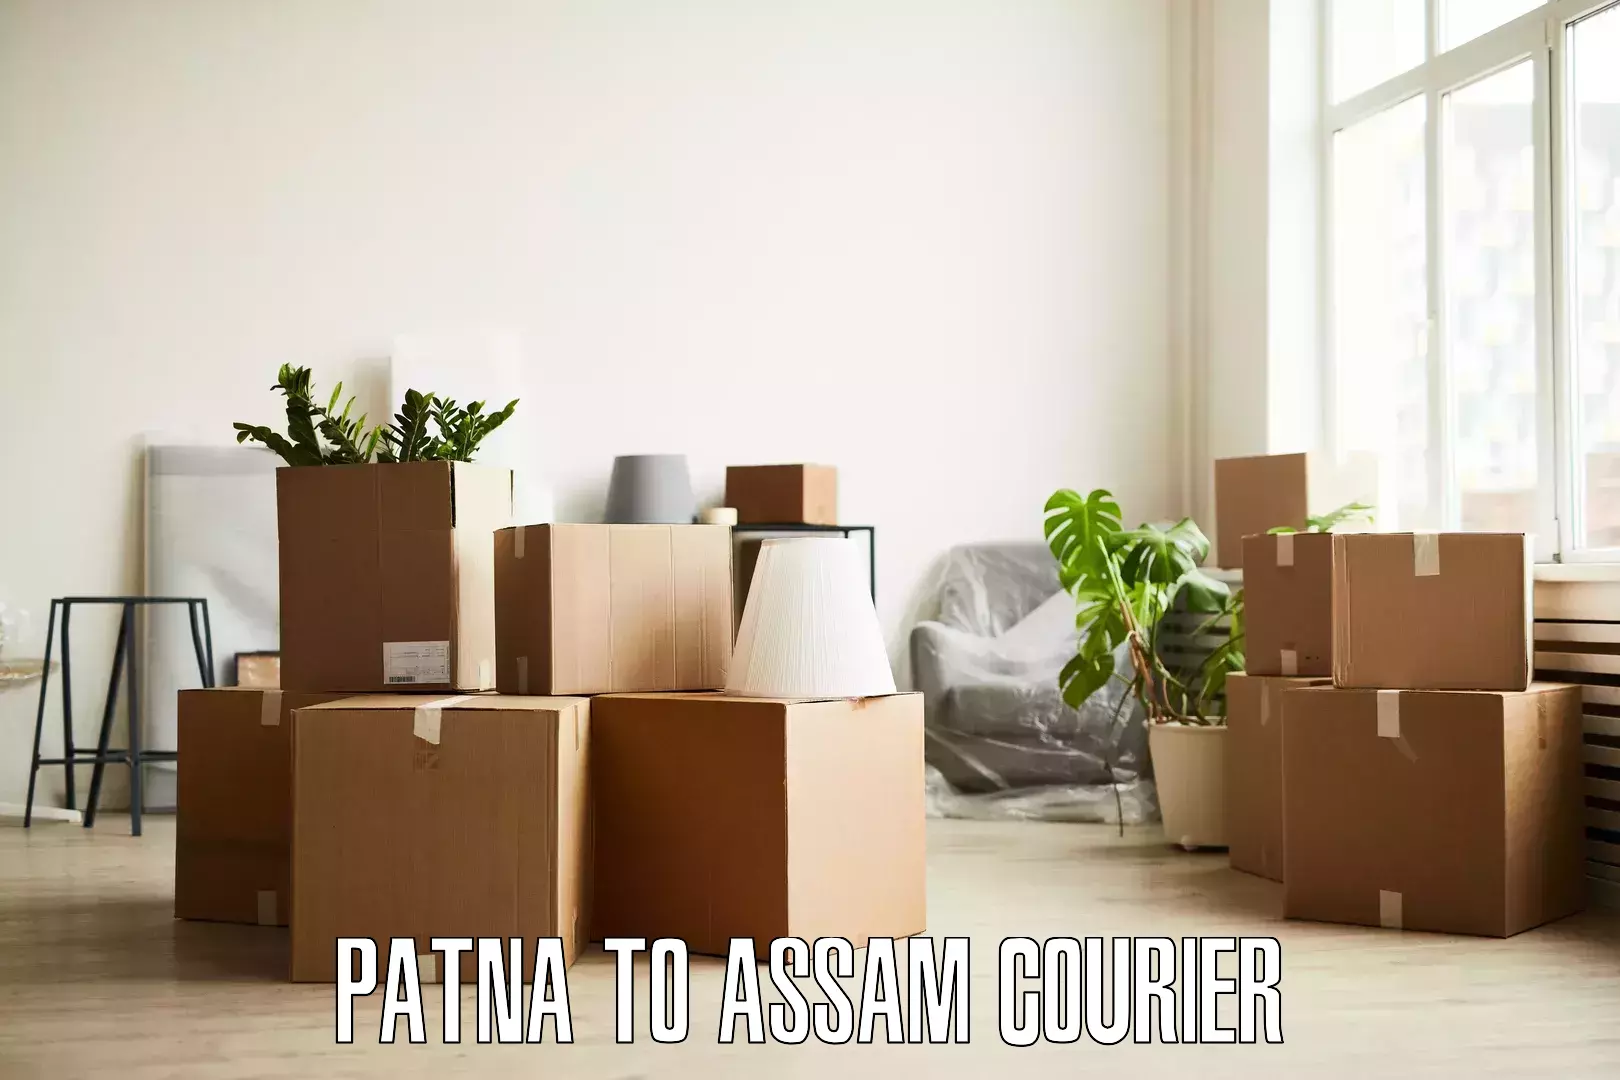 Trusted moving company Patna to Lala Assam